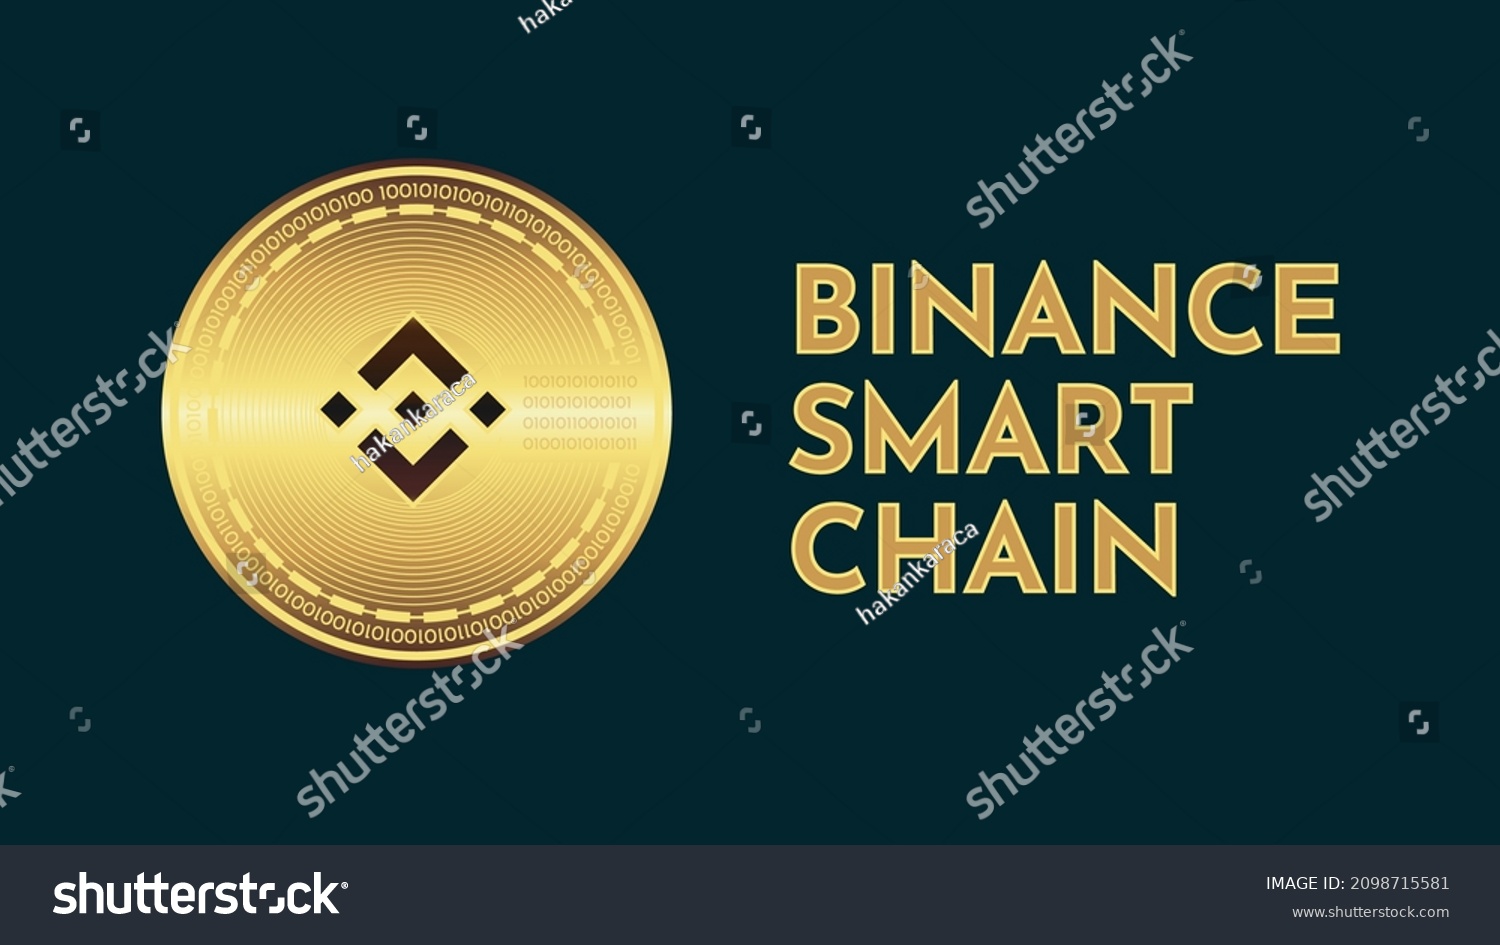 SVG of binance smart chain cz bnb cryptocurrency best blockchain network fee low binance smart chain bep2 bep20 coin gold money market bitcoin  svg